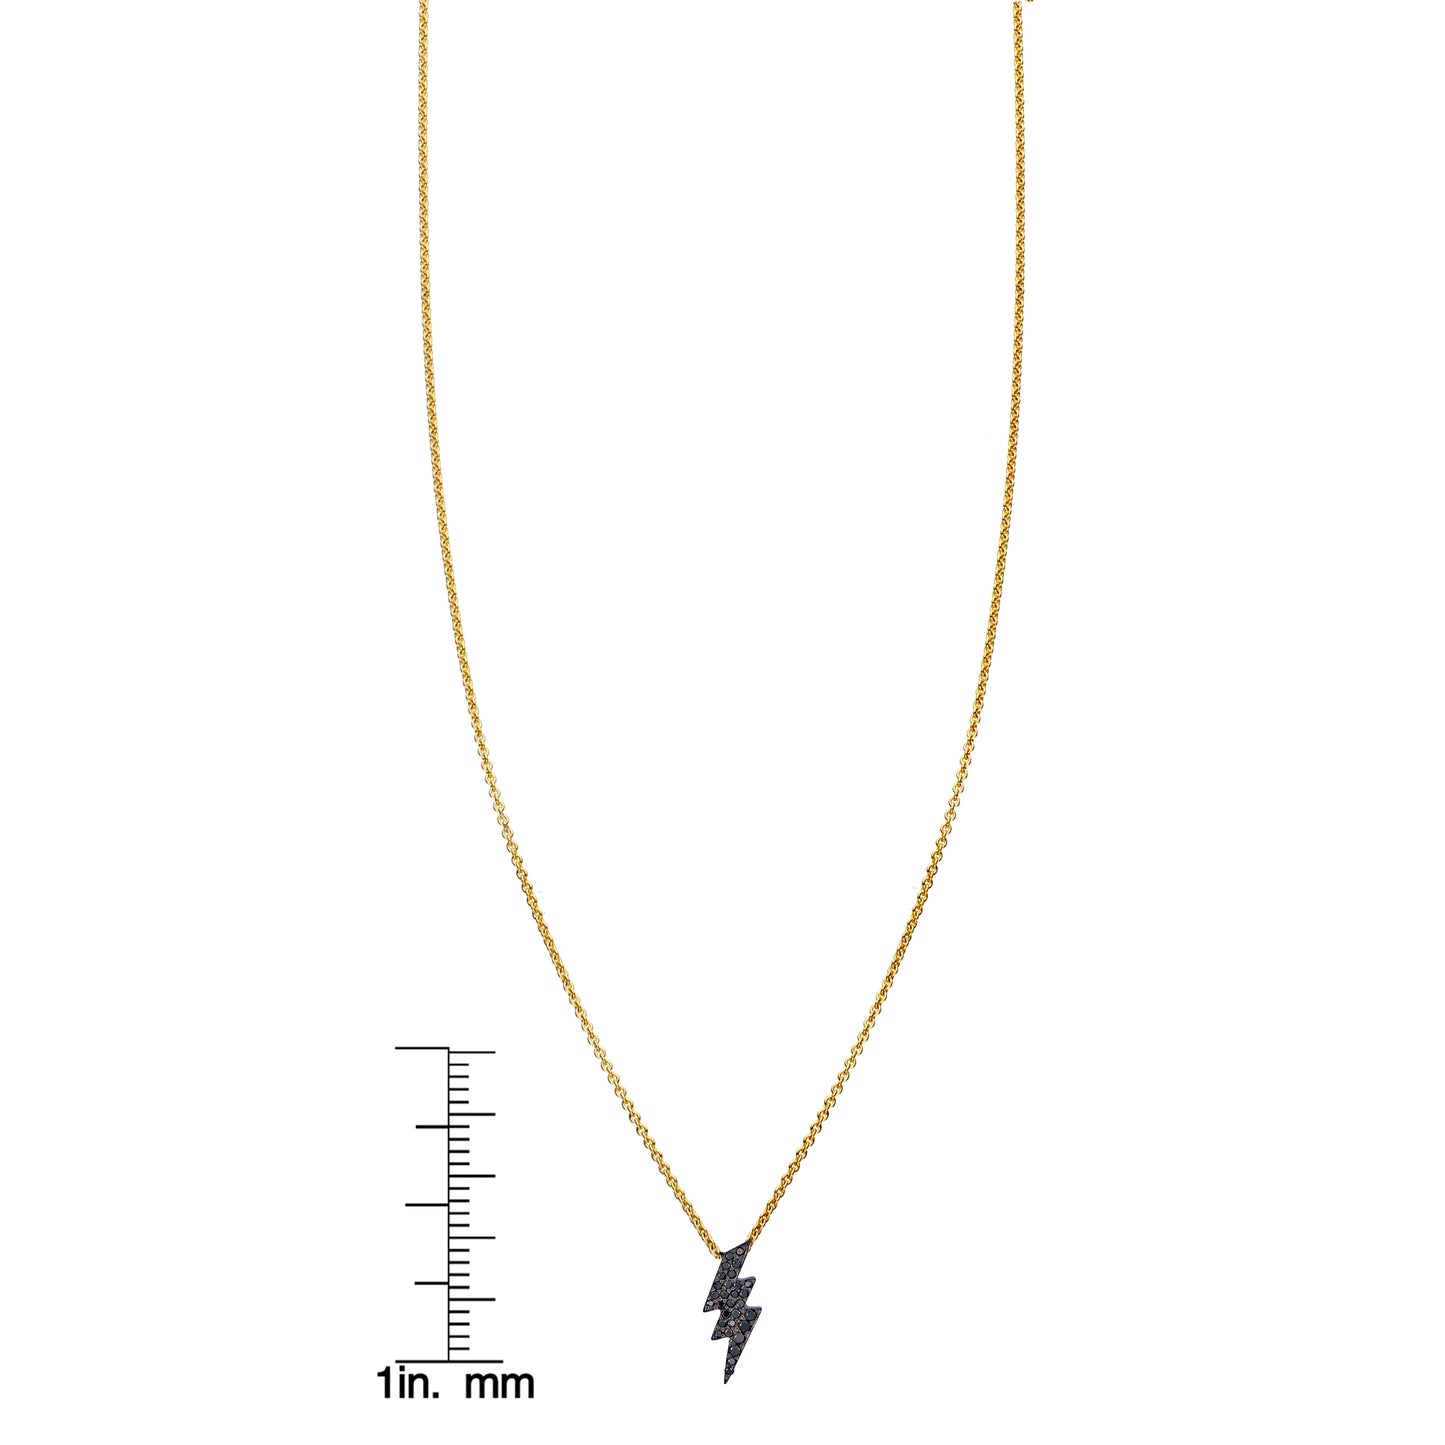 black diamond gold lightning necklace with ruler_169142d2 0861 459b a247 e6824207a50b